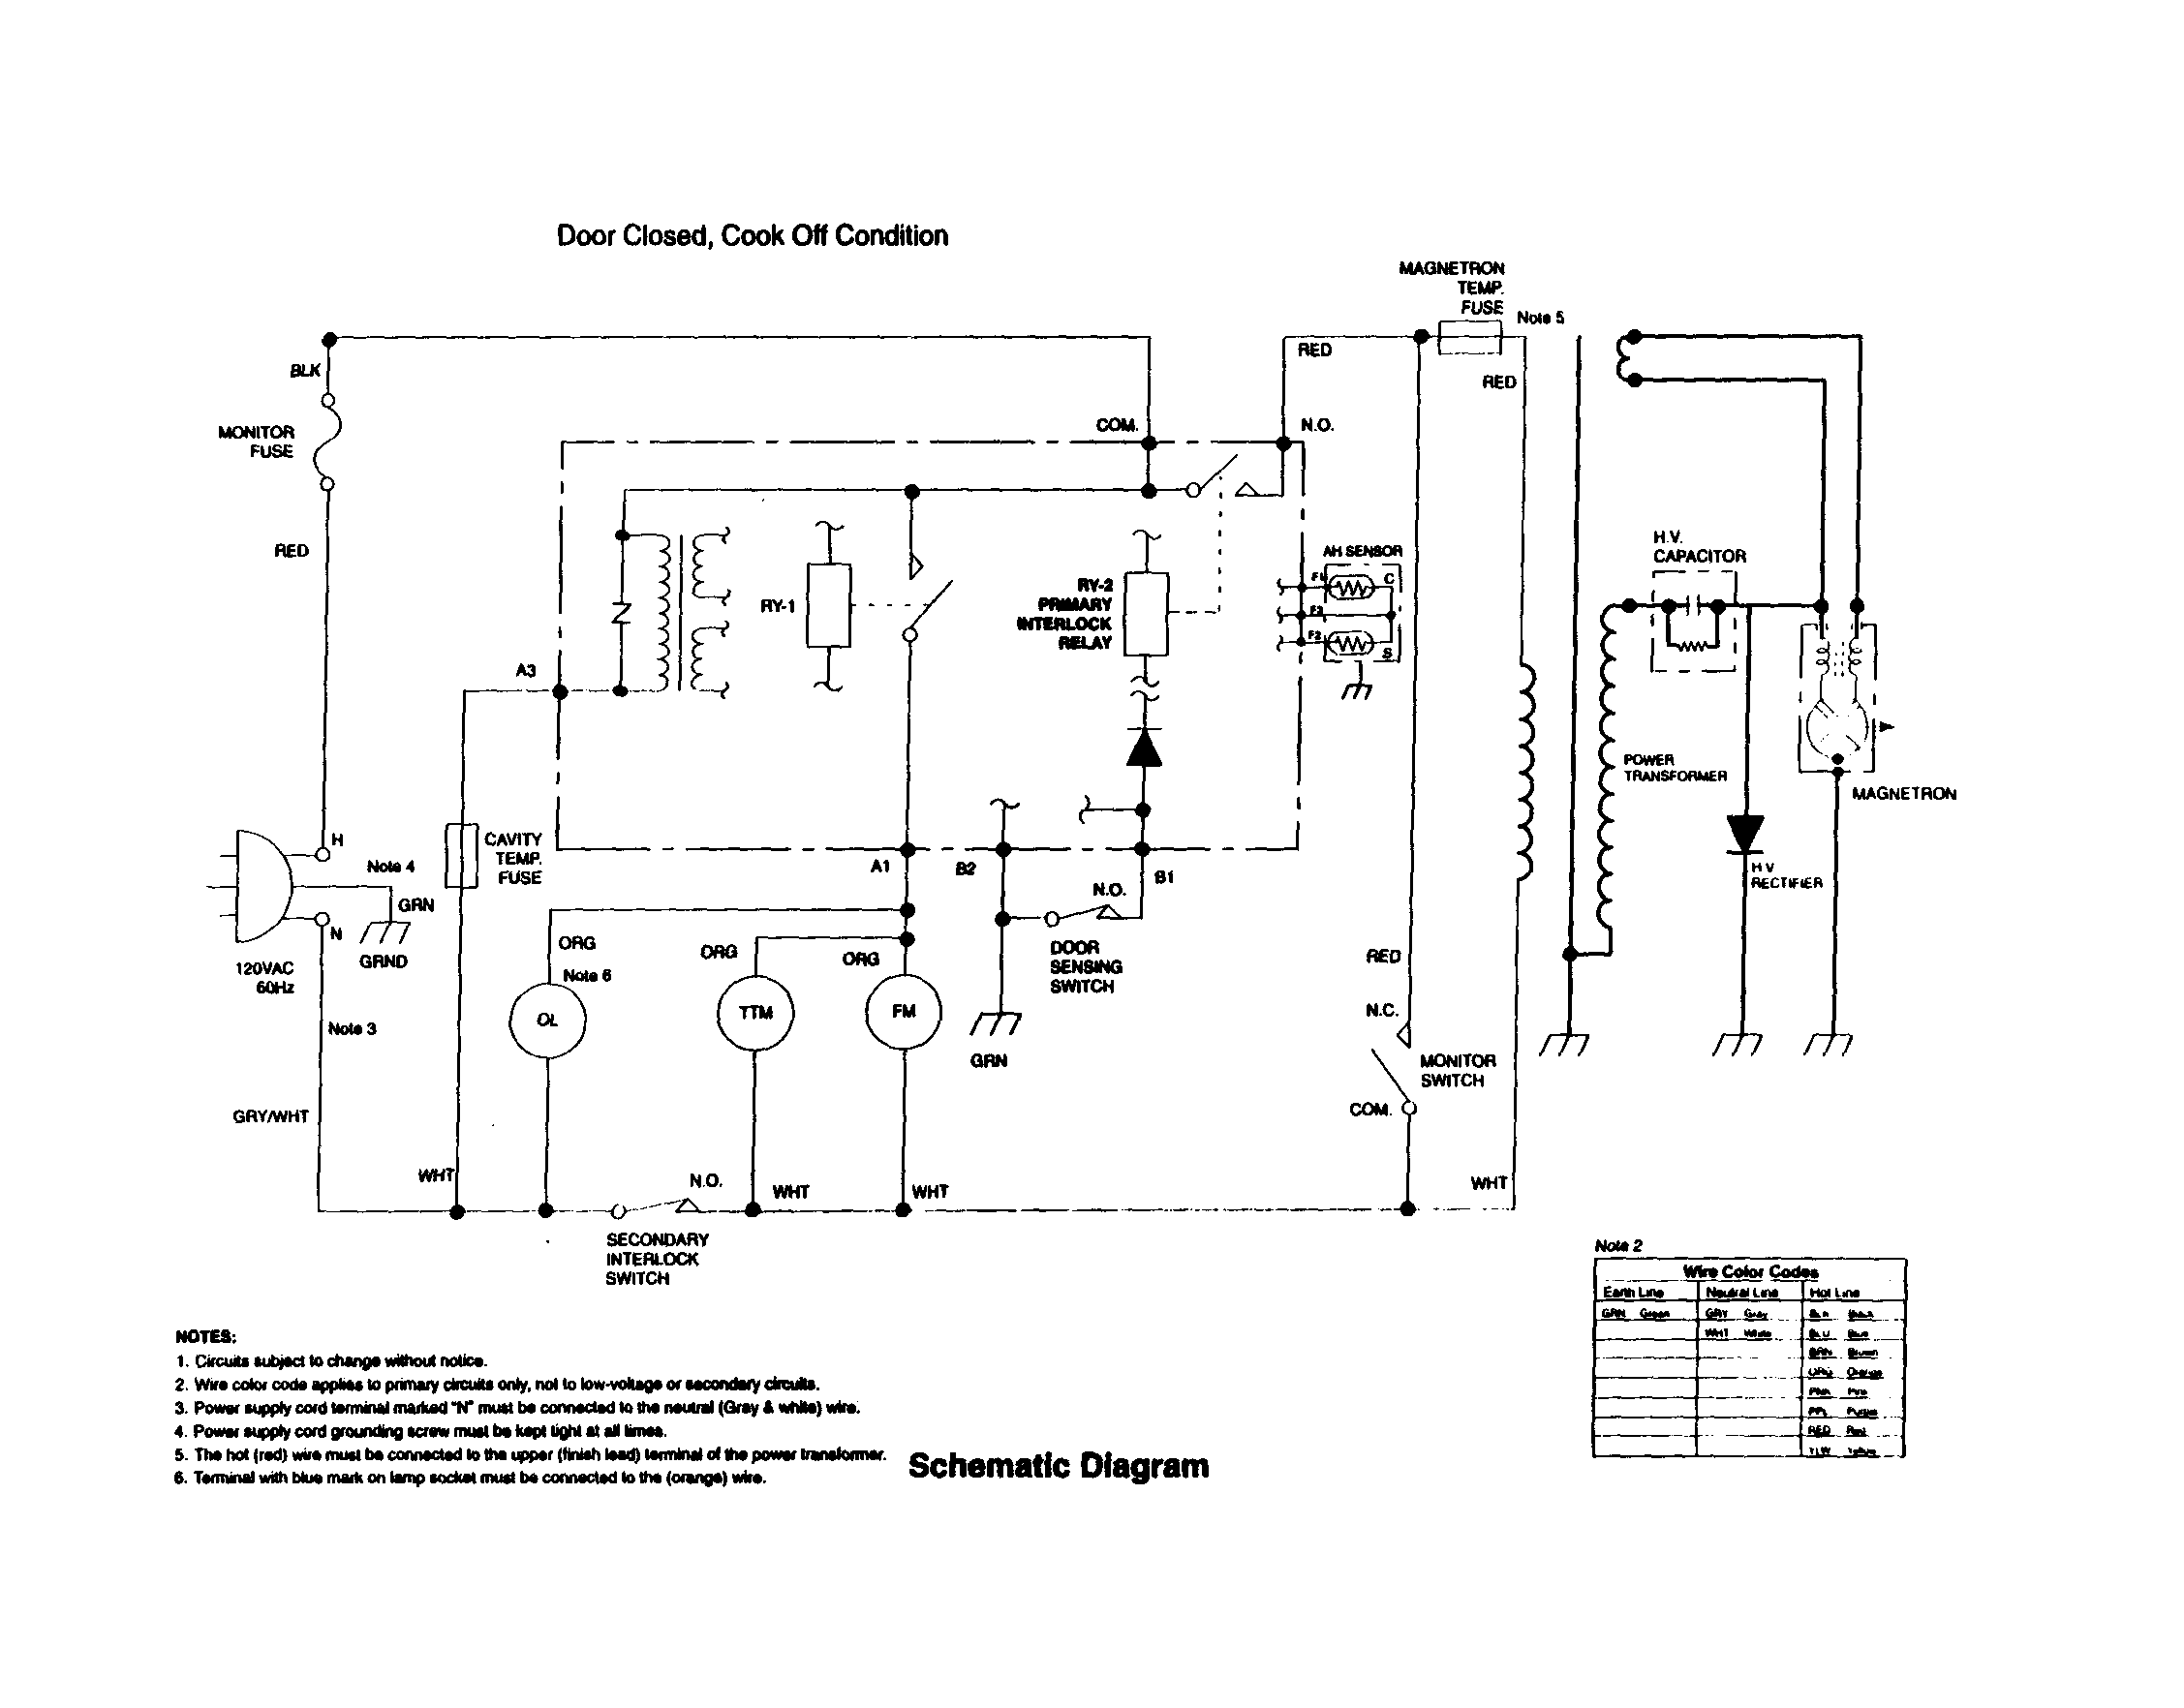 Schematic Diagram Diagram  U0026 Parts List For Model R530aw